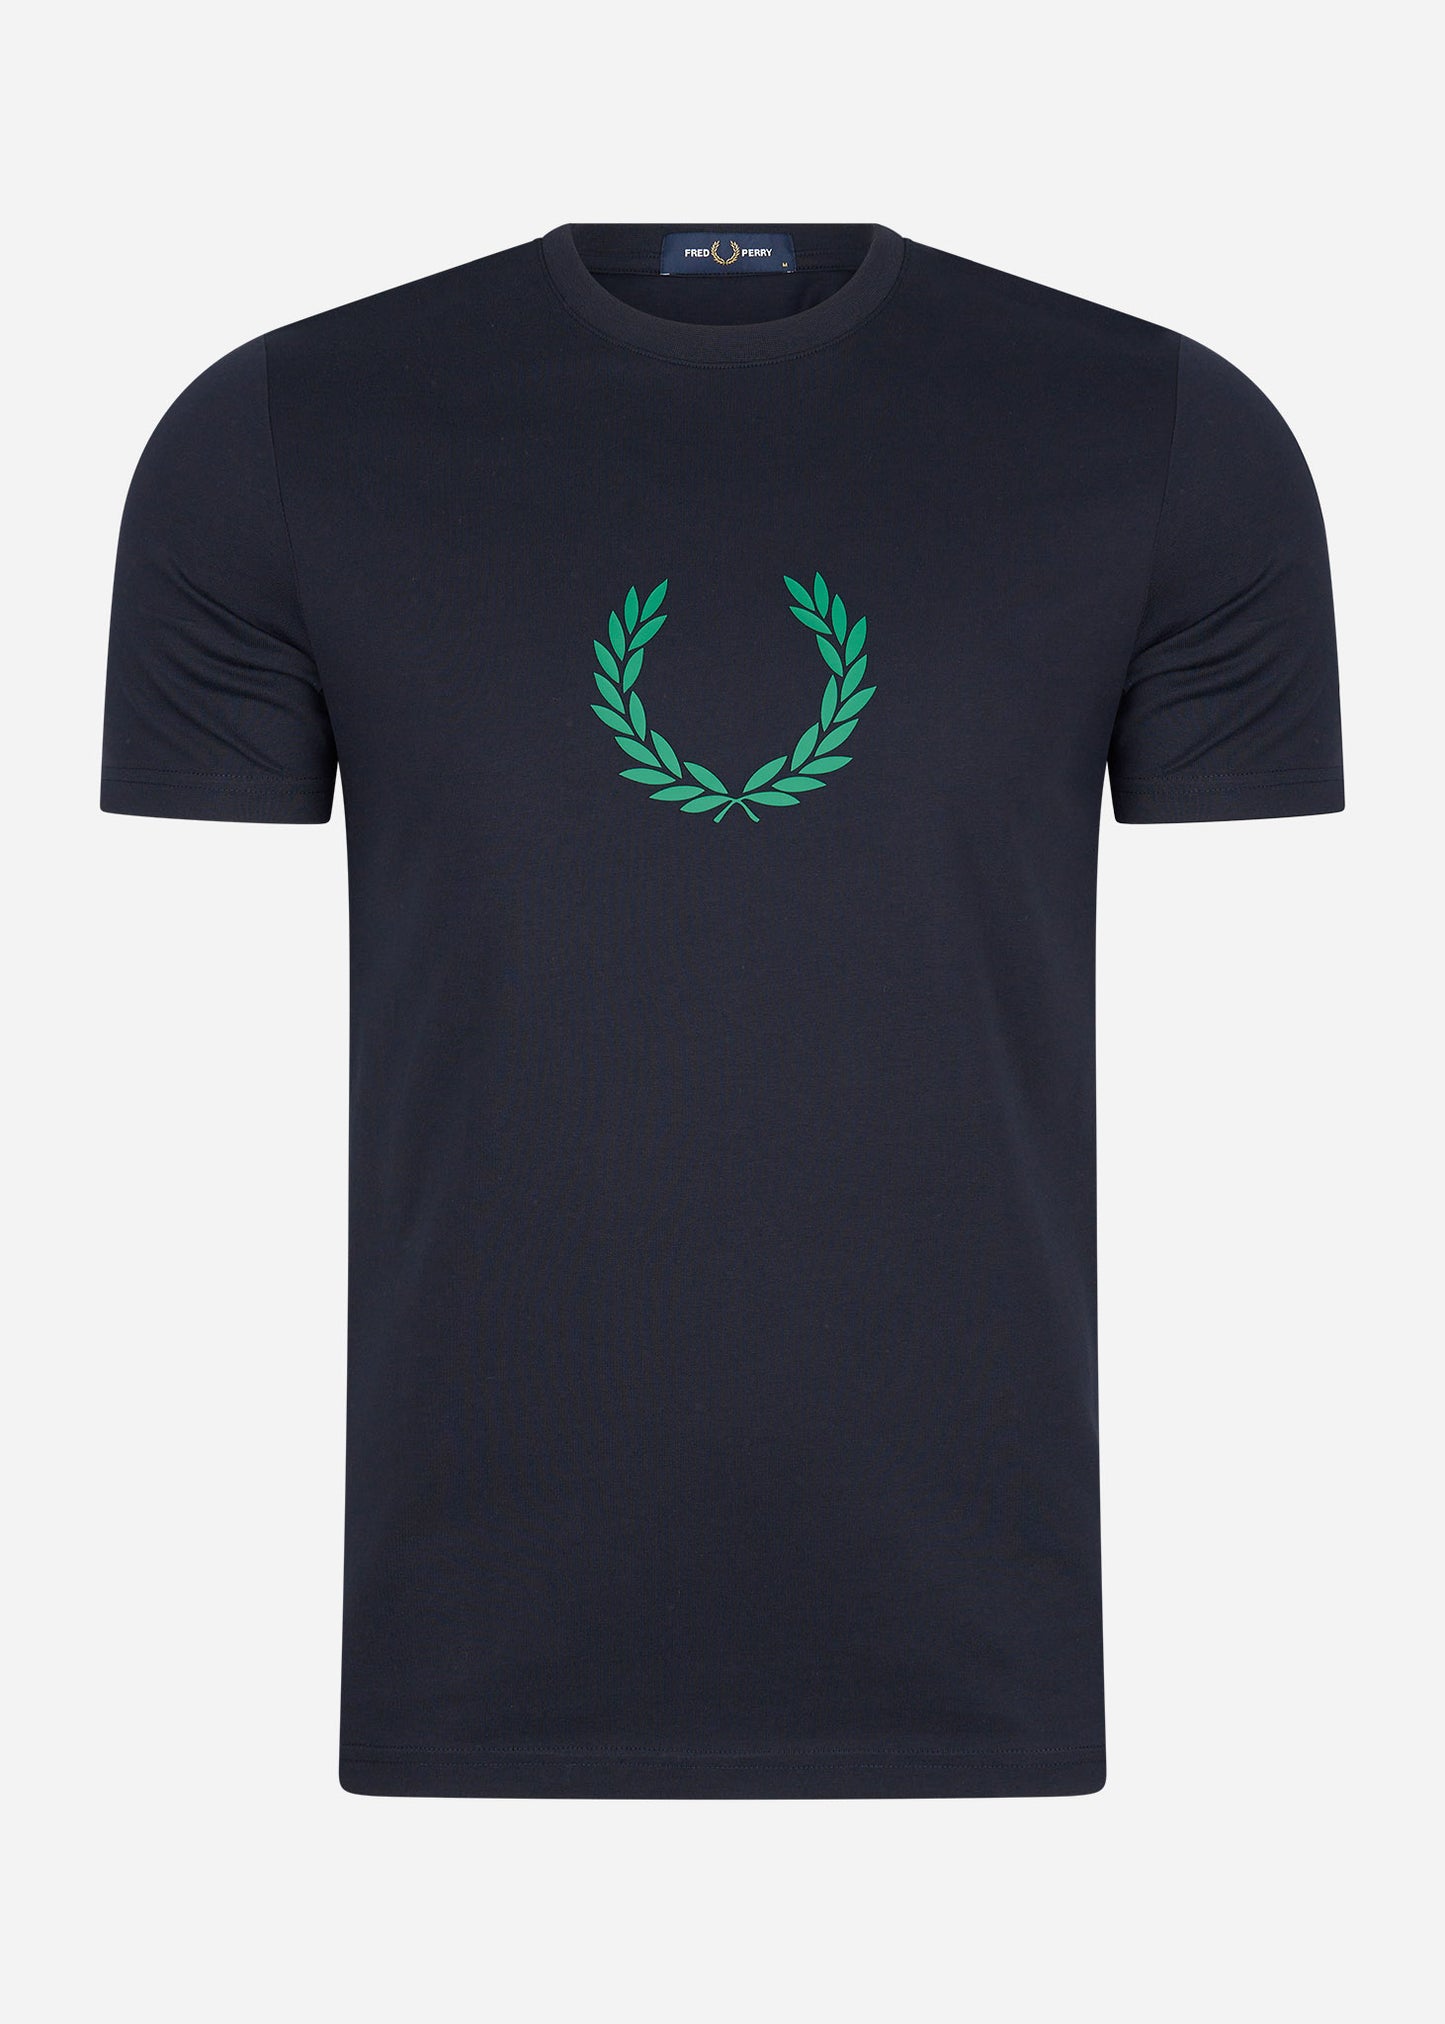 Laurel wreath graphic t-shirt - navy